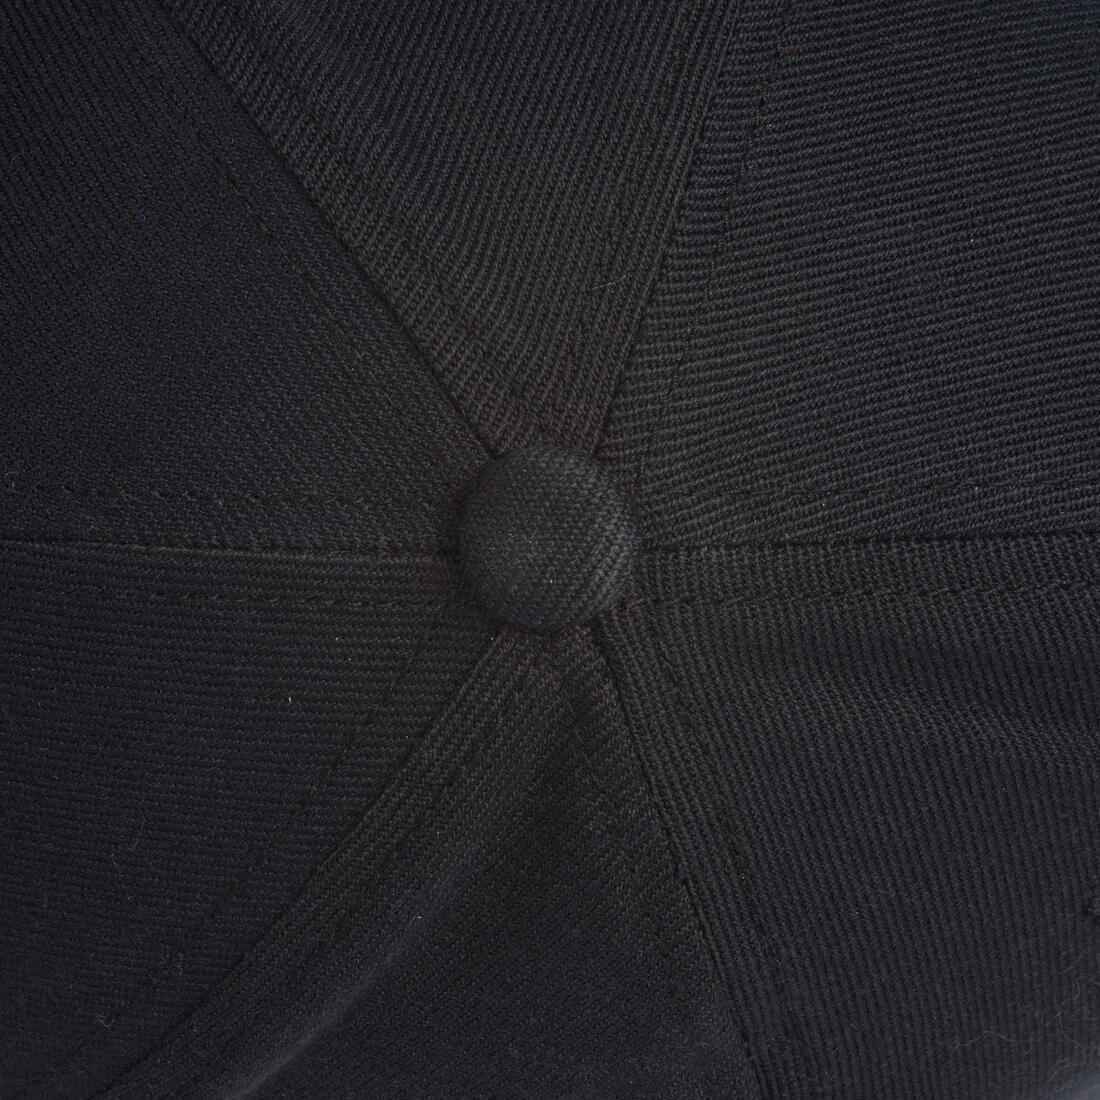 KIPSTA - Kipsta Ba550 Baseball Cap Hat Adult Low Profile Fitted, Black